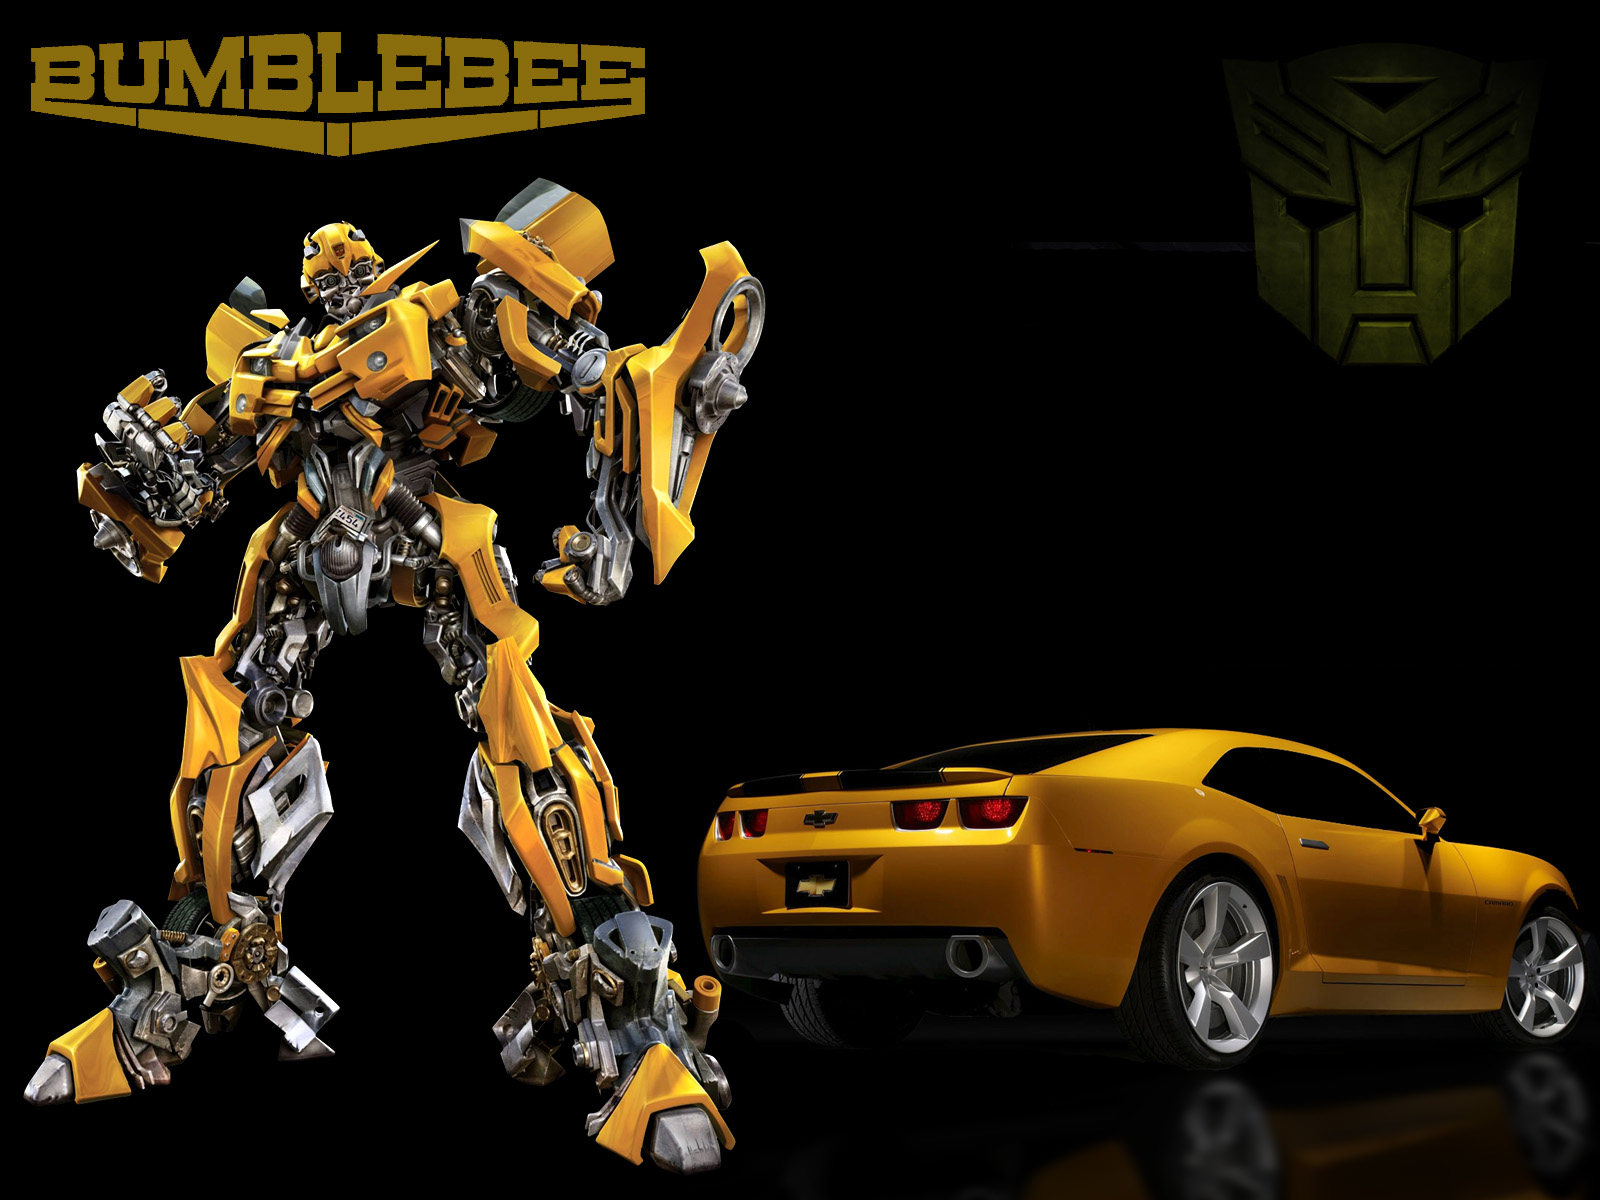 Bumblebee - The Transformers Wallpaper (36901552) - Fanpop